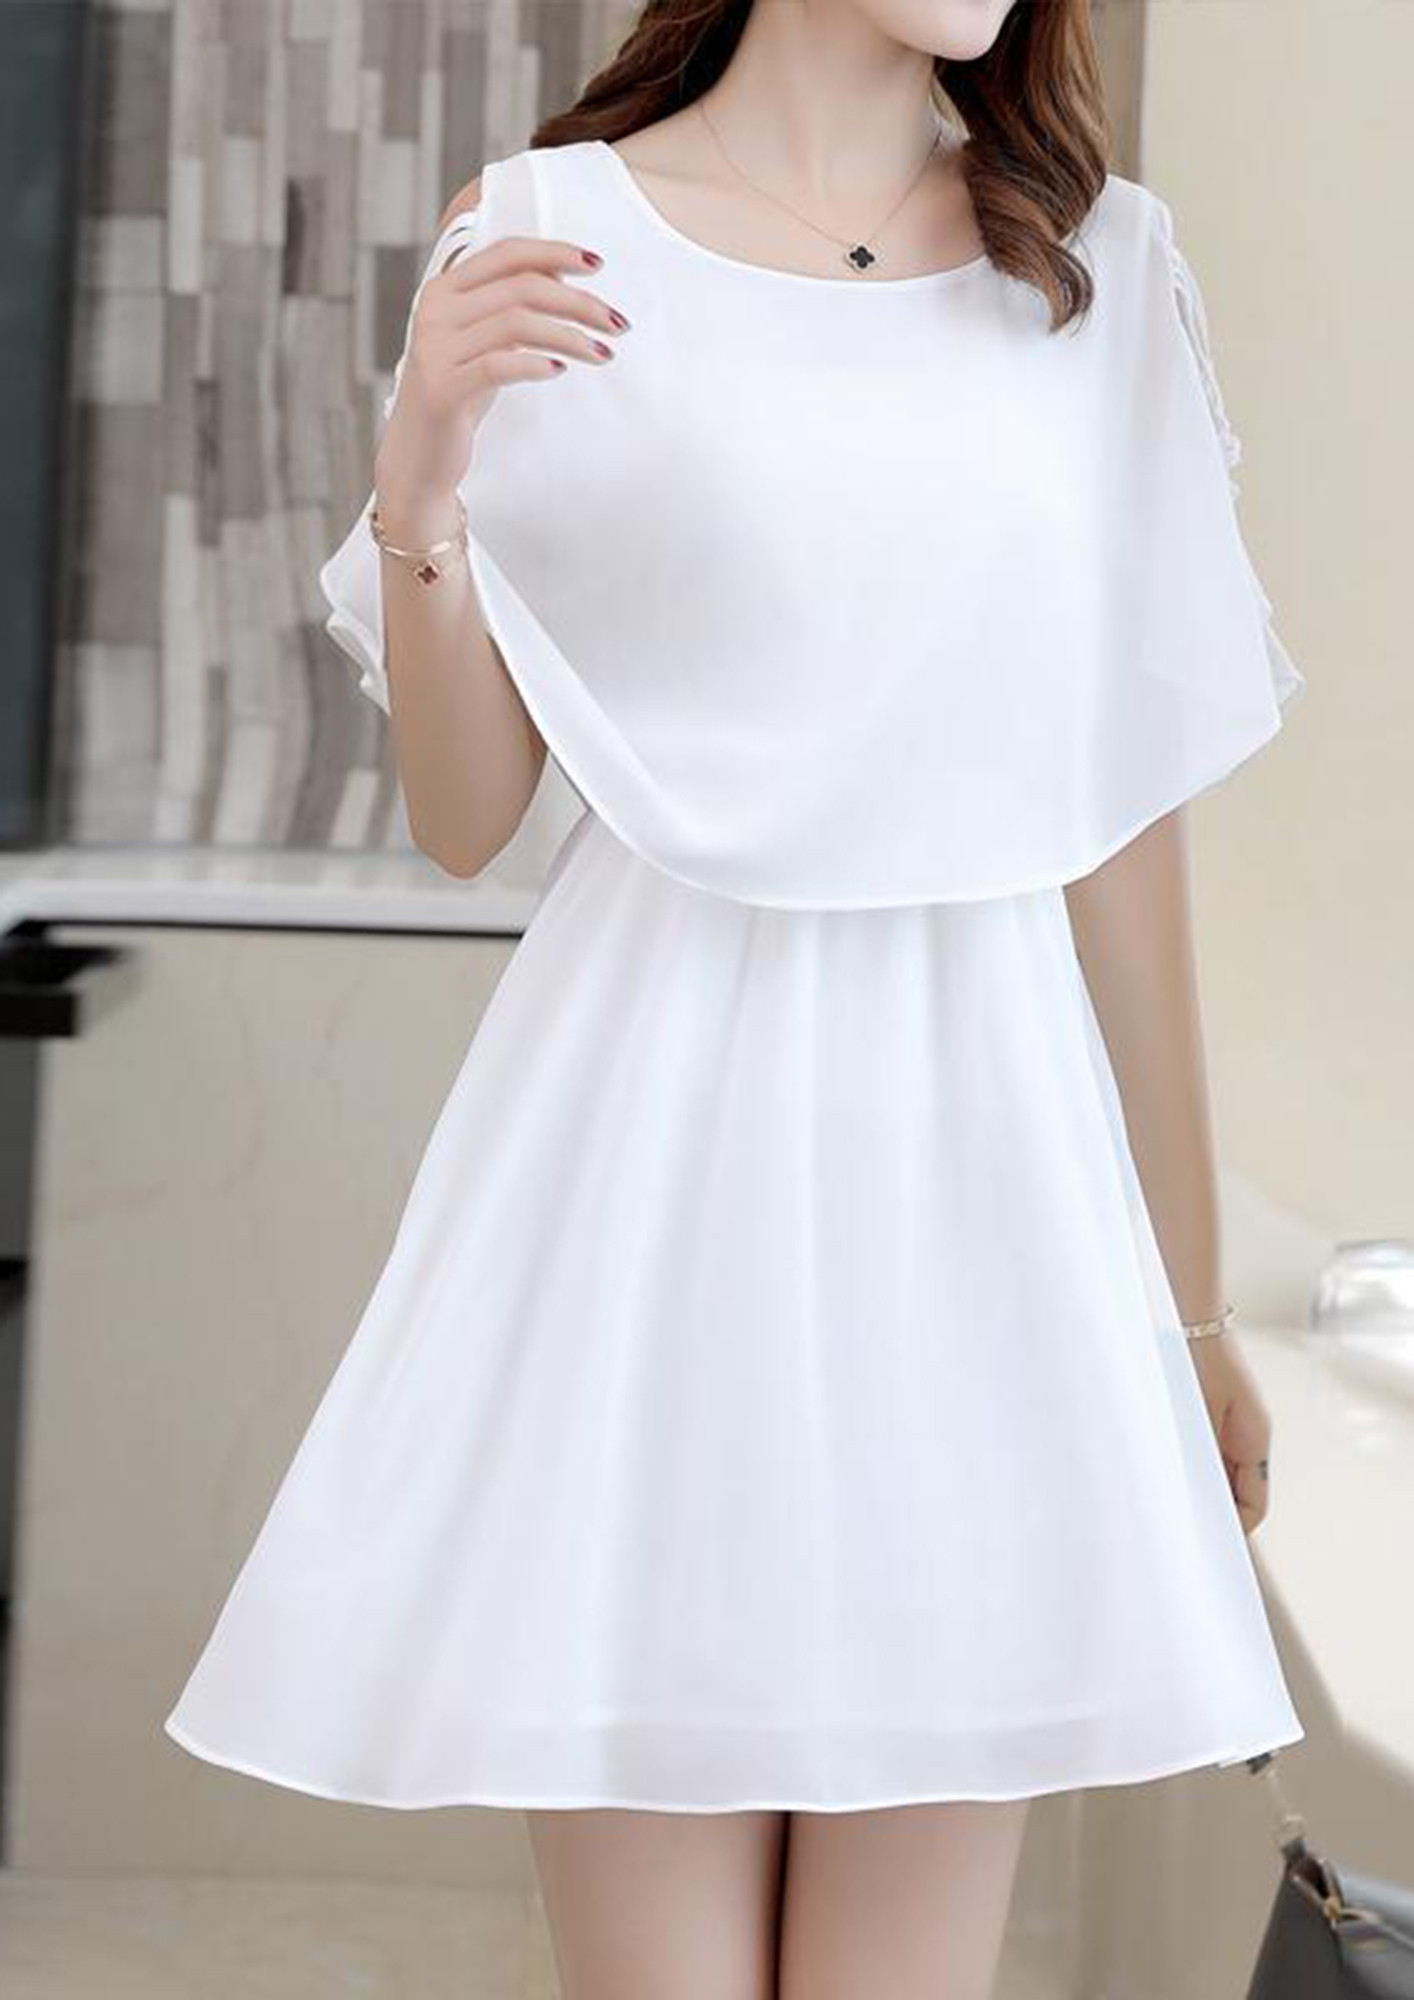 TRULY ADORABLE WHITE CHIFFON DRESS